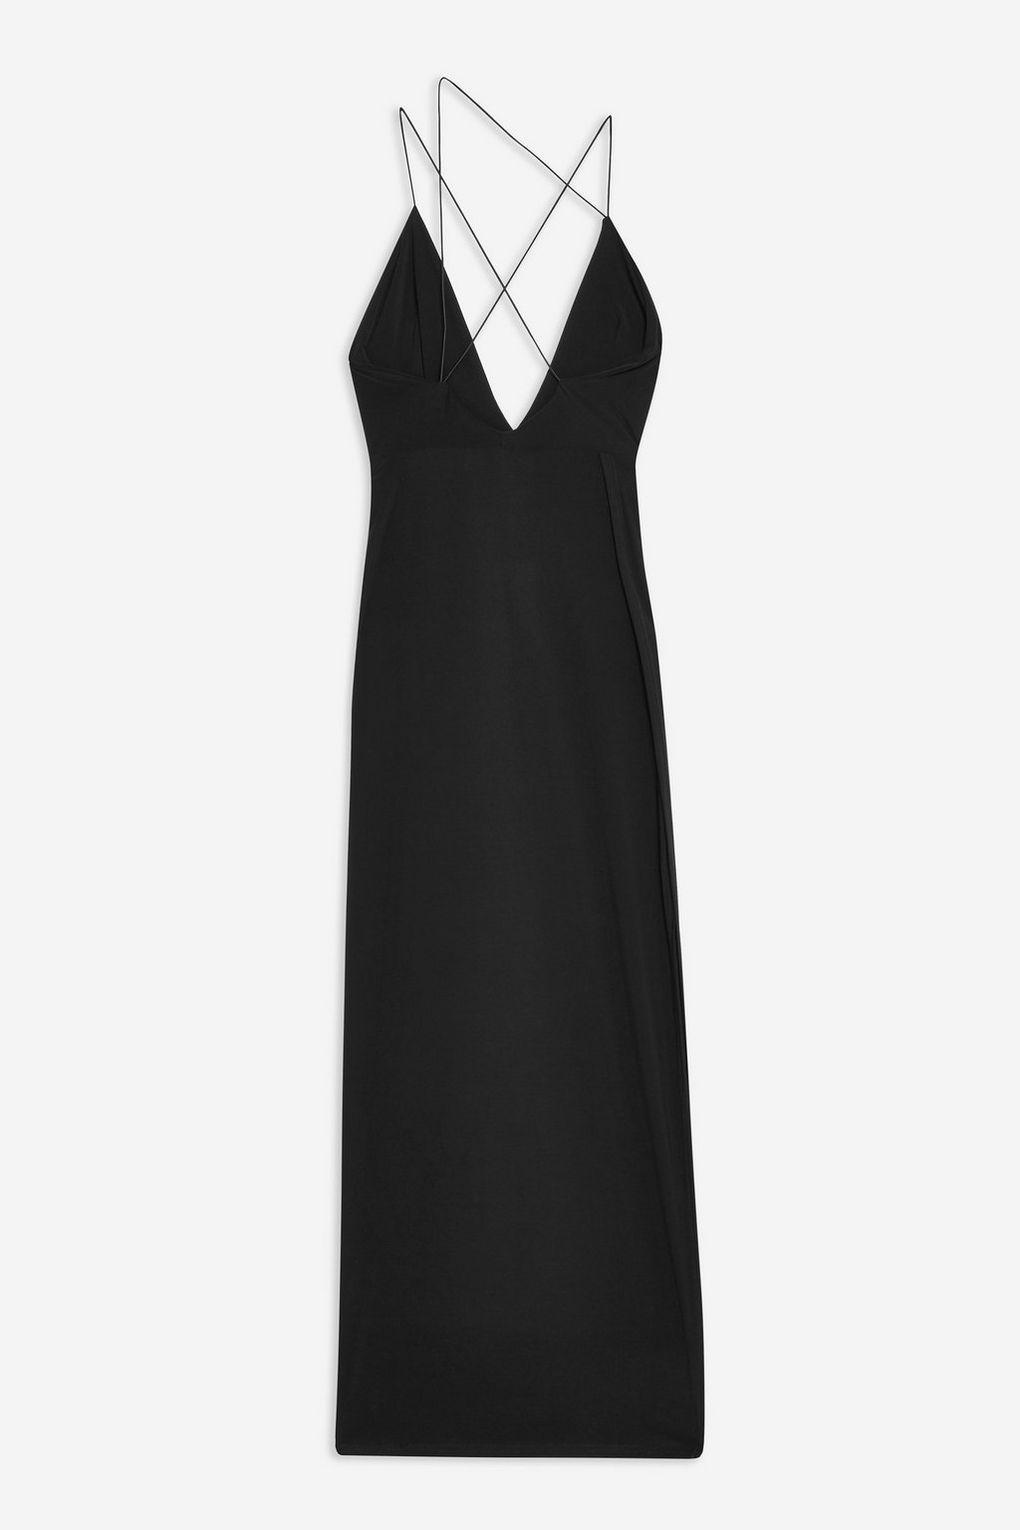 Black V and L Logo - Black V Plunge Strappy Dress by CLUB L - Clothing- Topshop